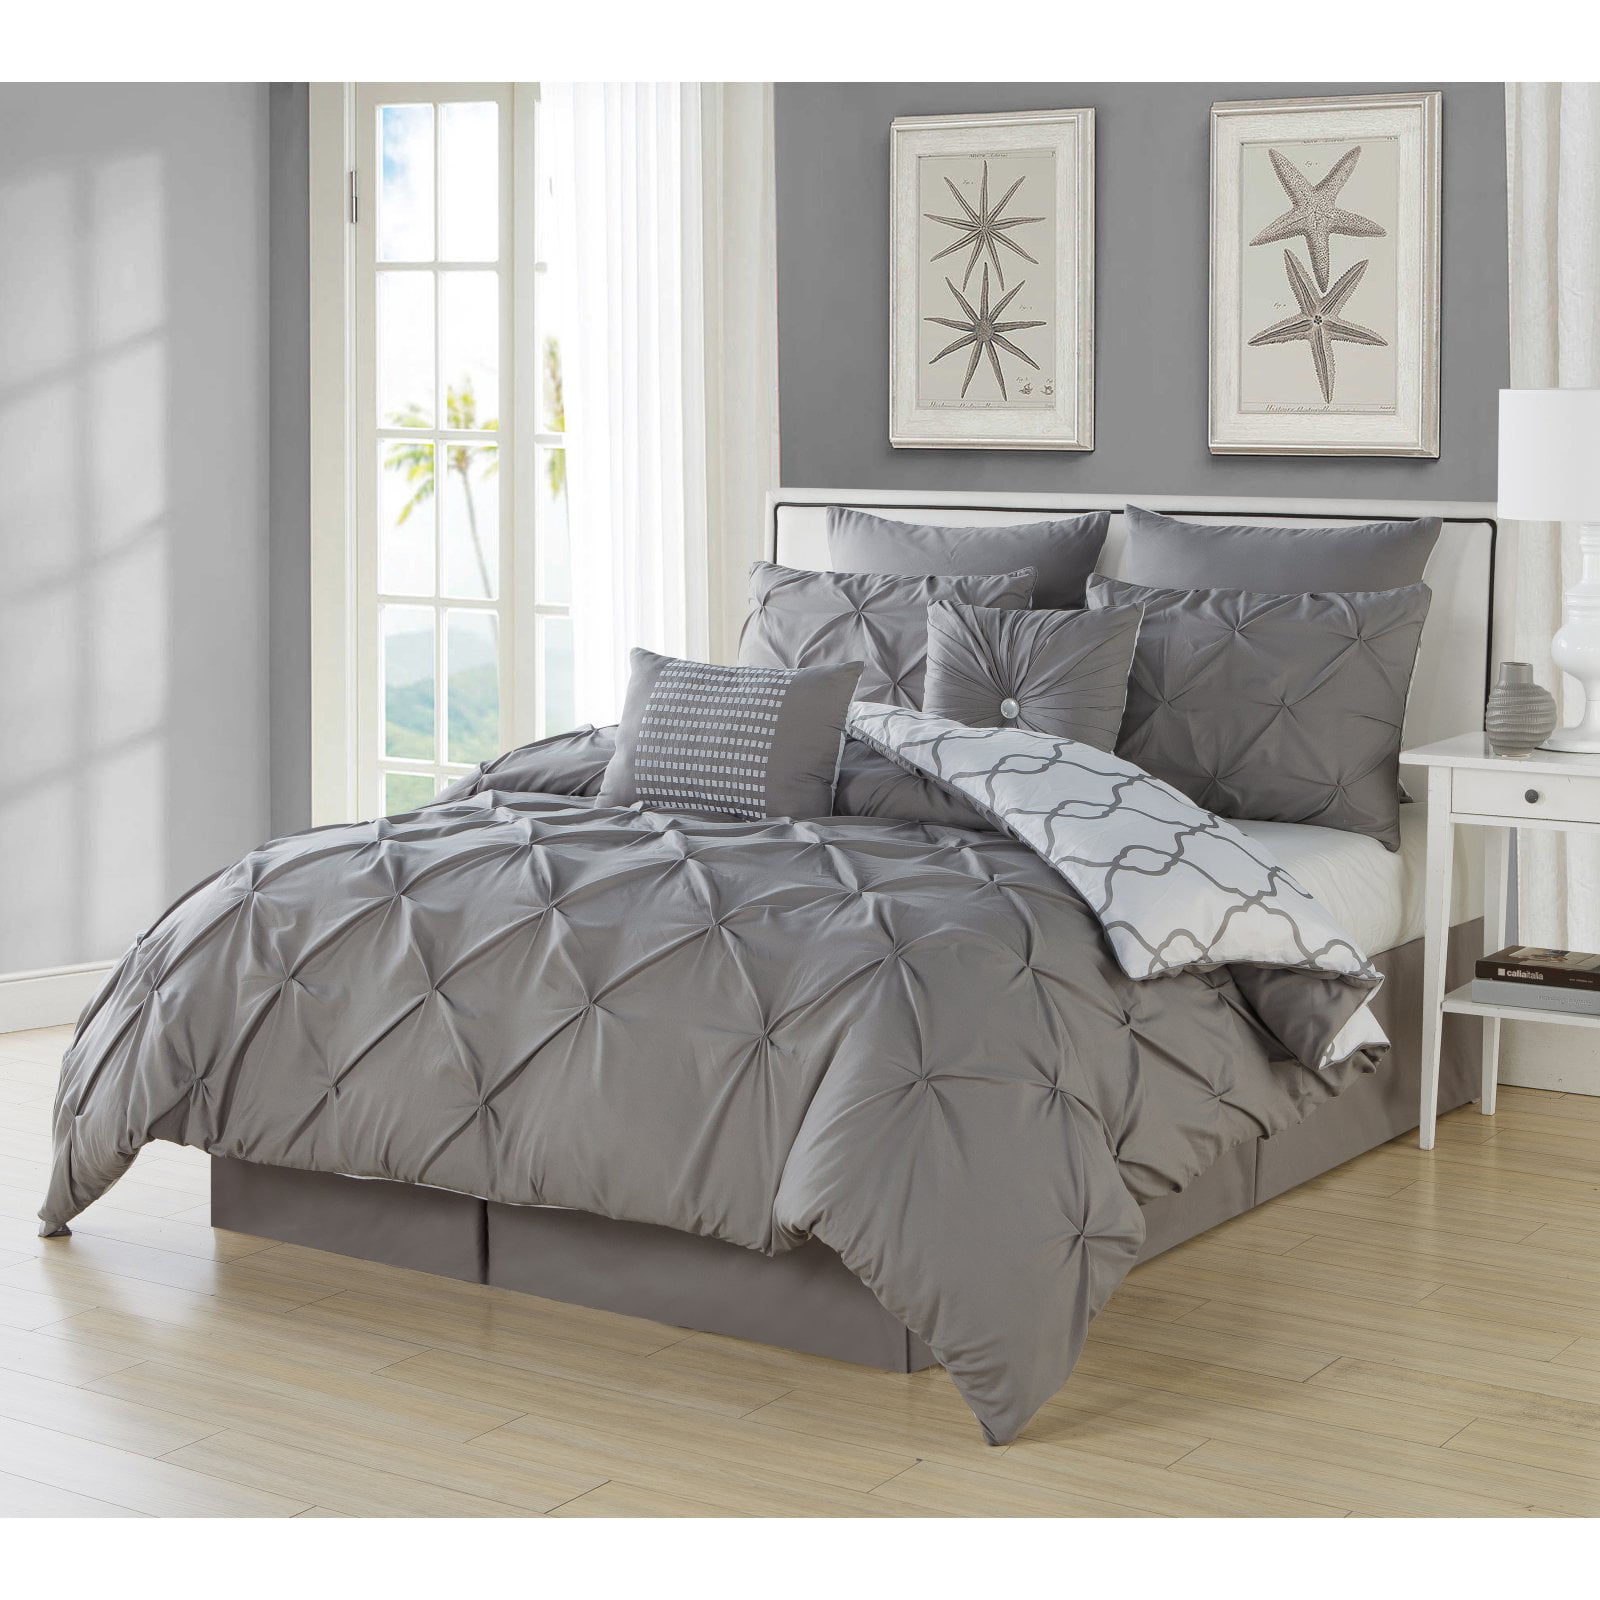 Esy Reversible 8 Piece King Comforter Set in Grey - Walmart.com